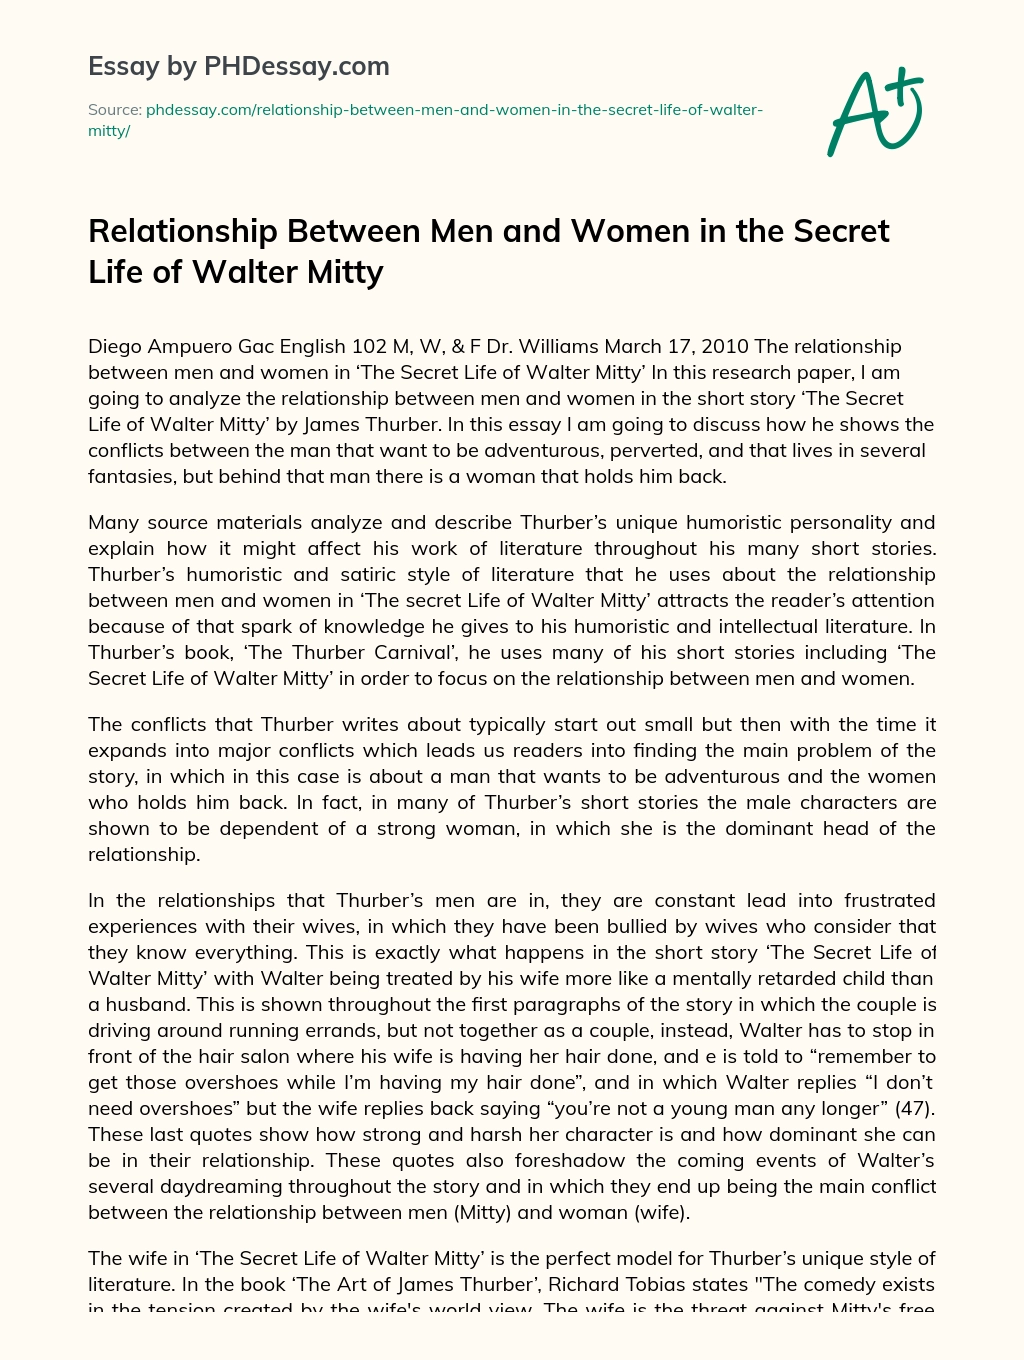 Relationship Between Men and Women in the Secret Life of Walter Mitty essay